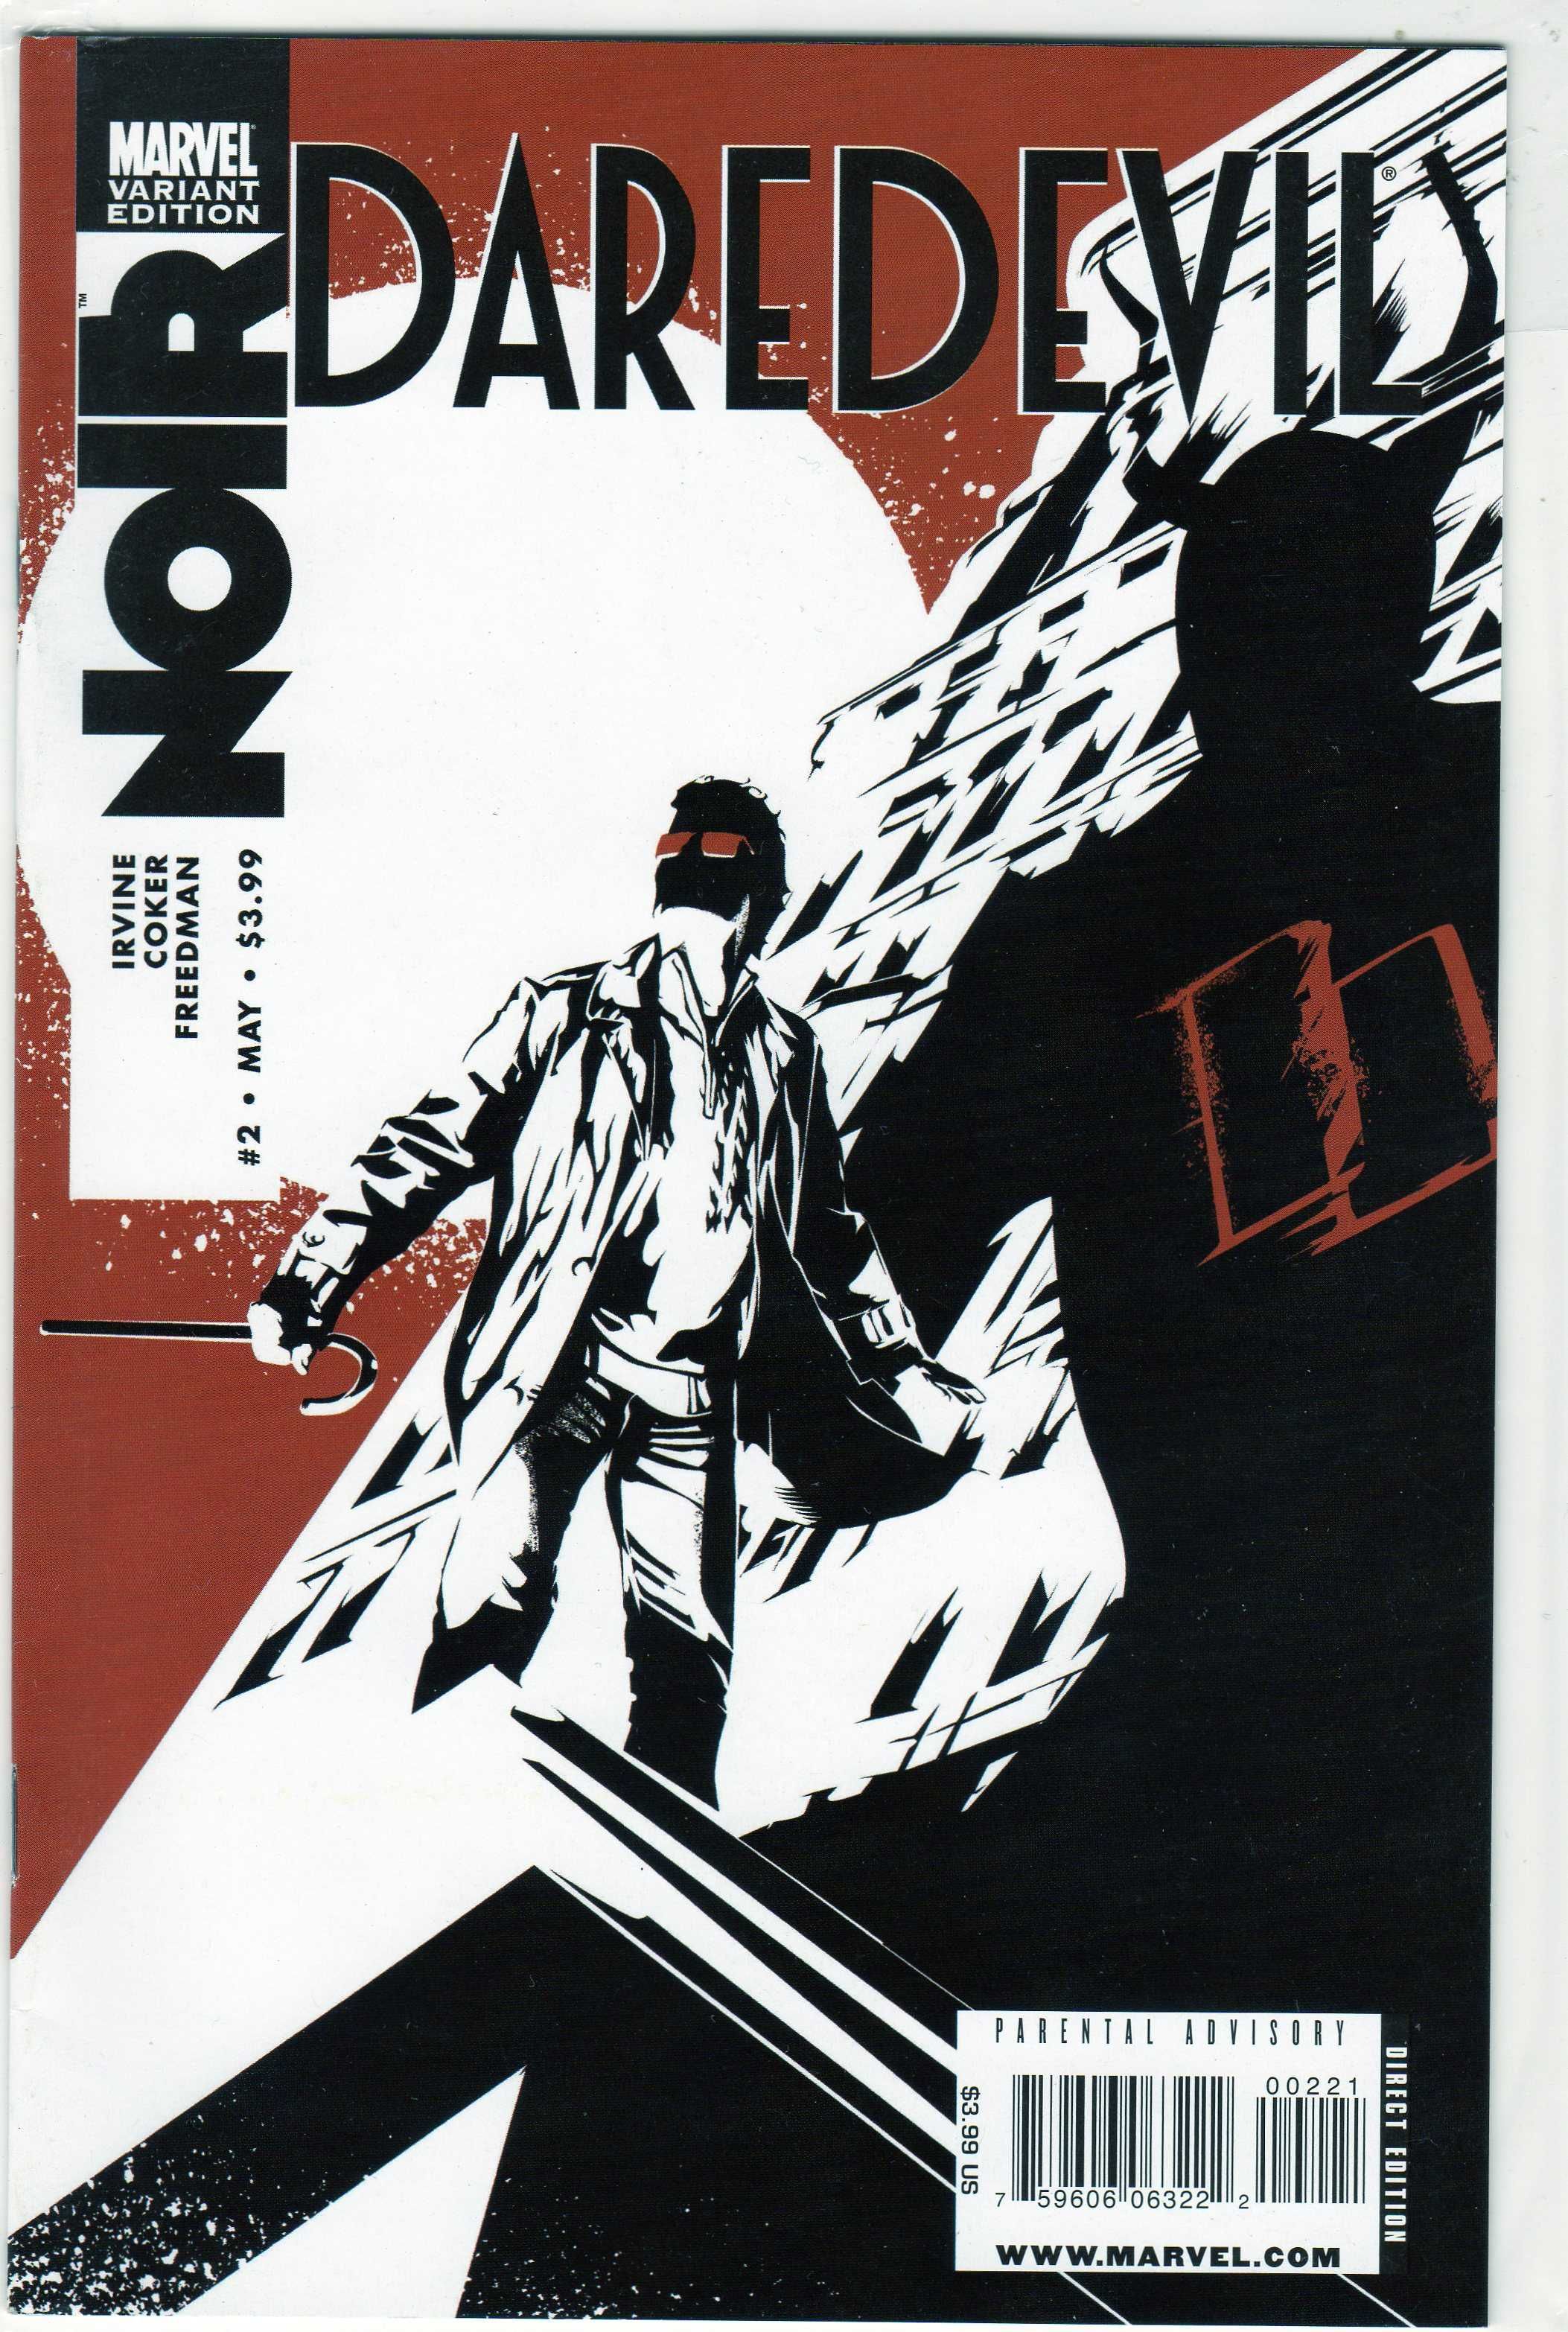 Daredevil Noir #2 Marvel variant edition - benzi desenate americane